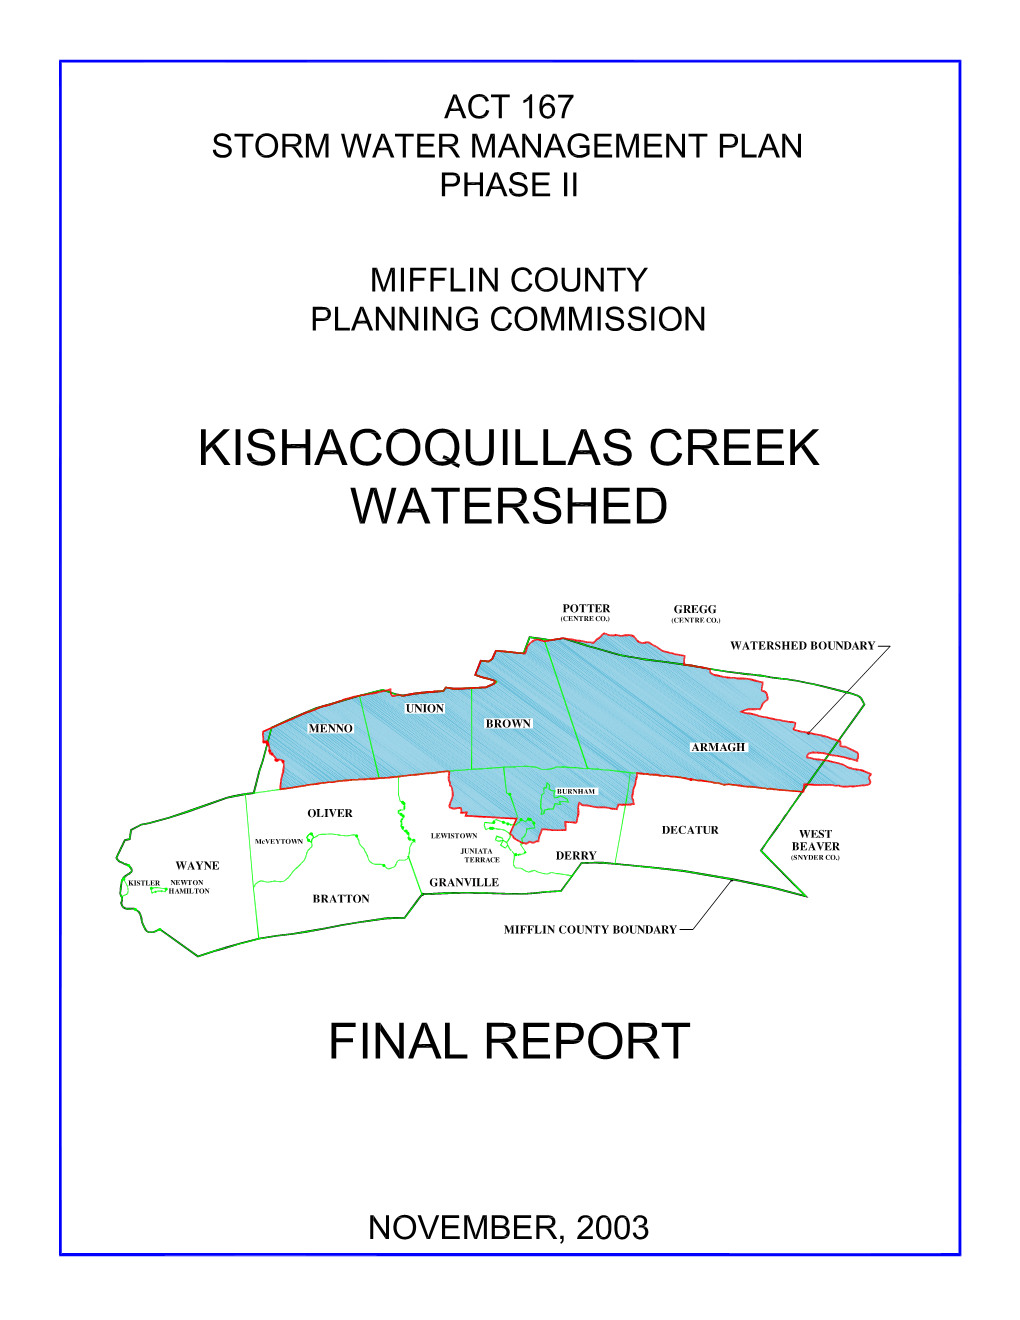 KISHACOQUILLAS CREEK WATERSHED Storm Water Management Ordinance